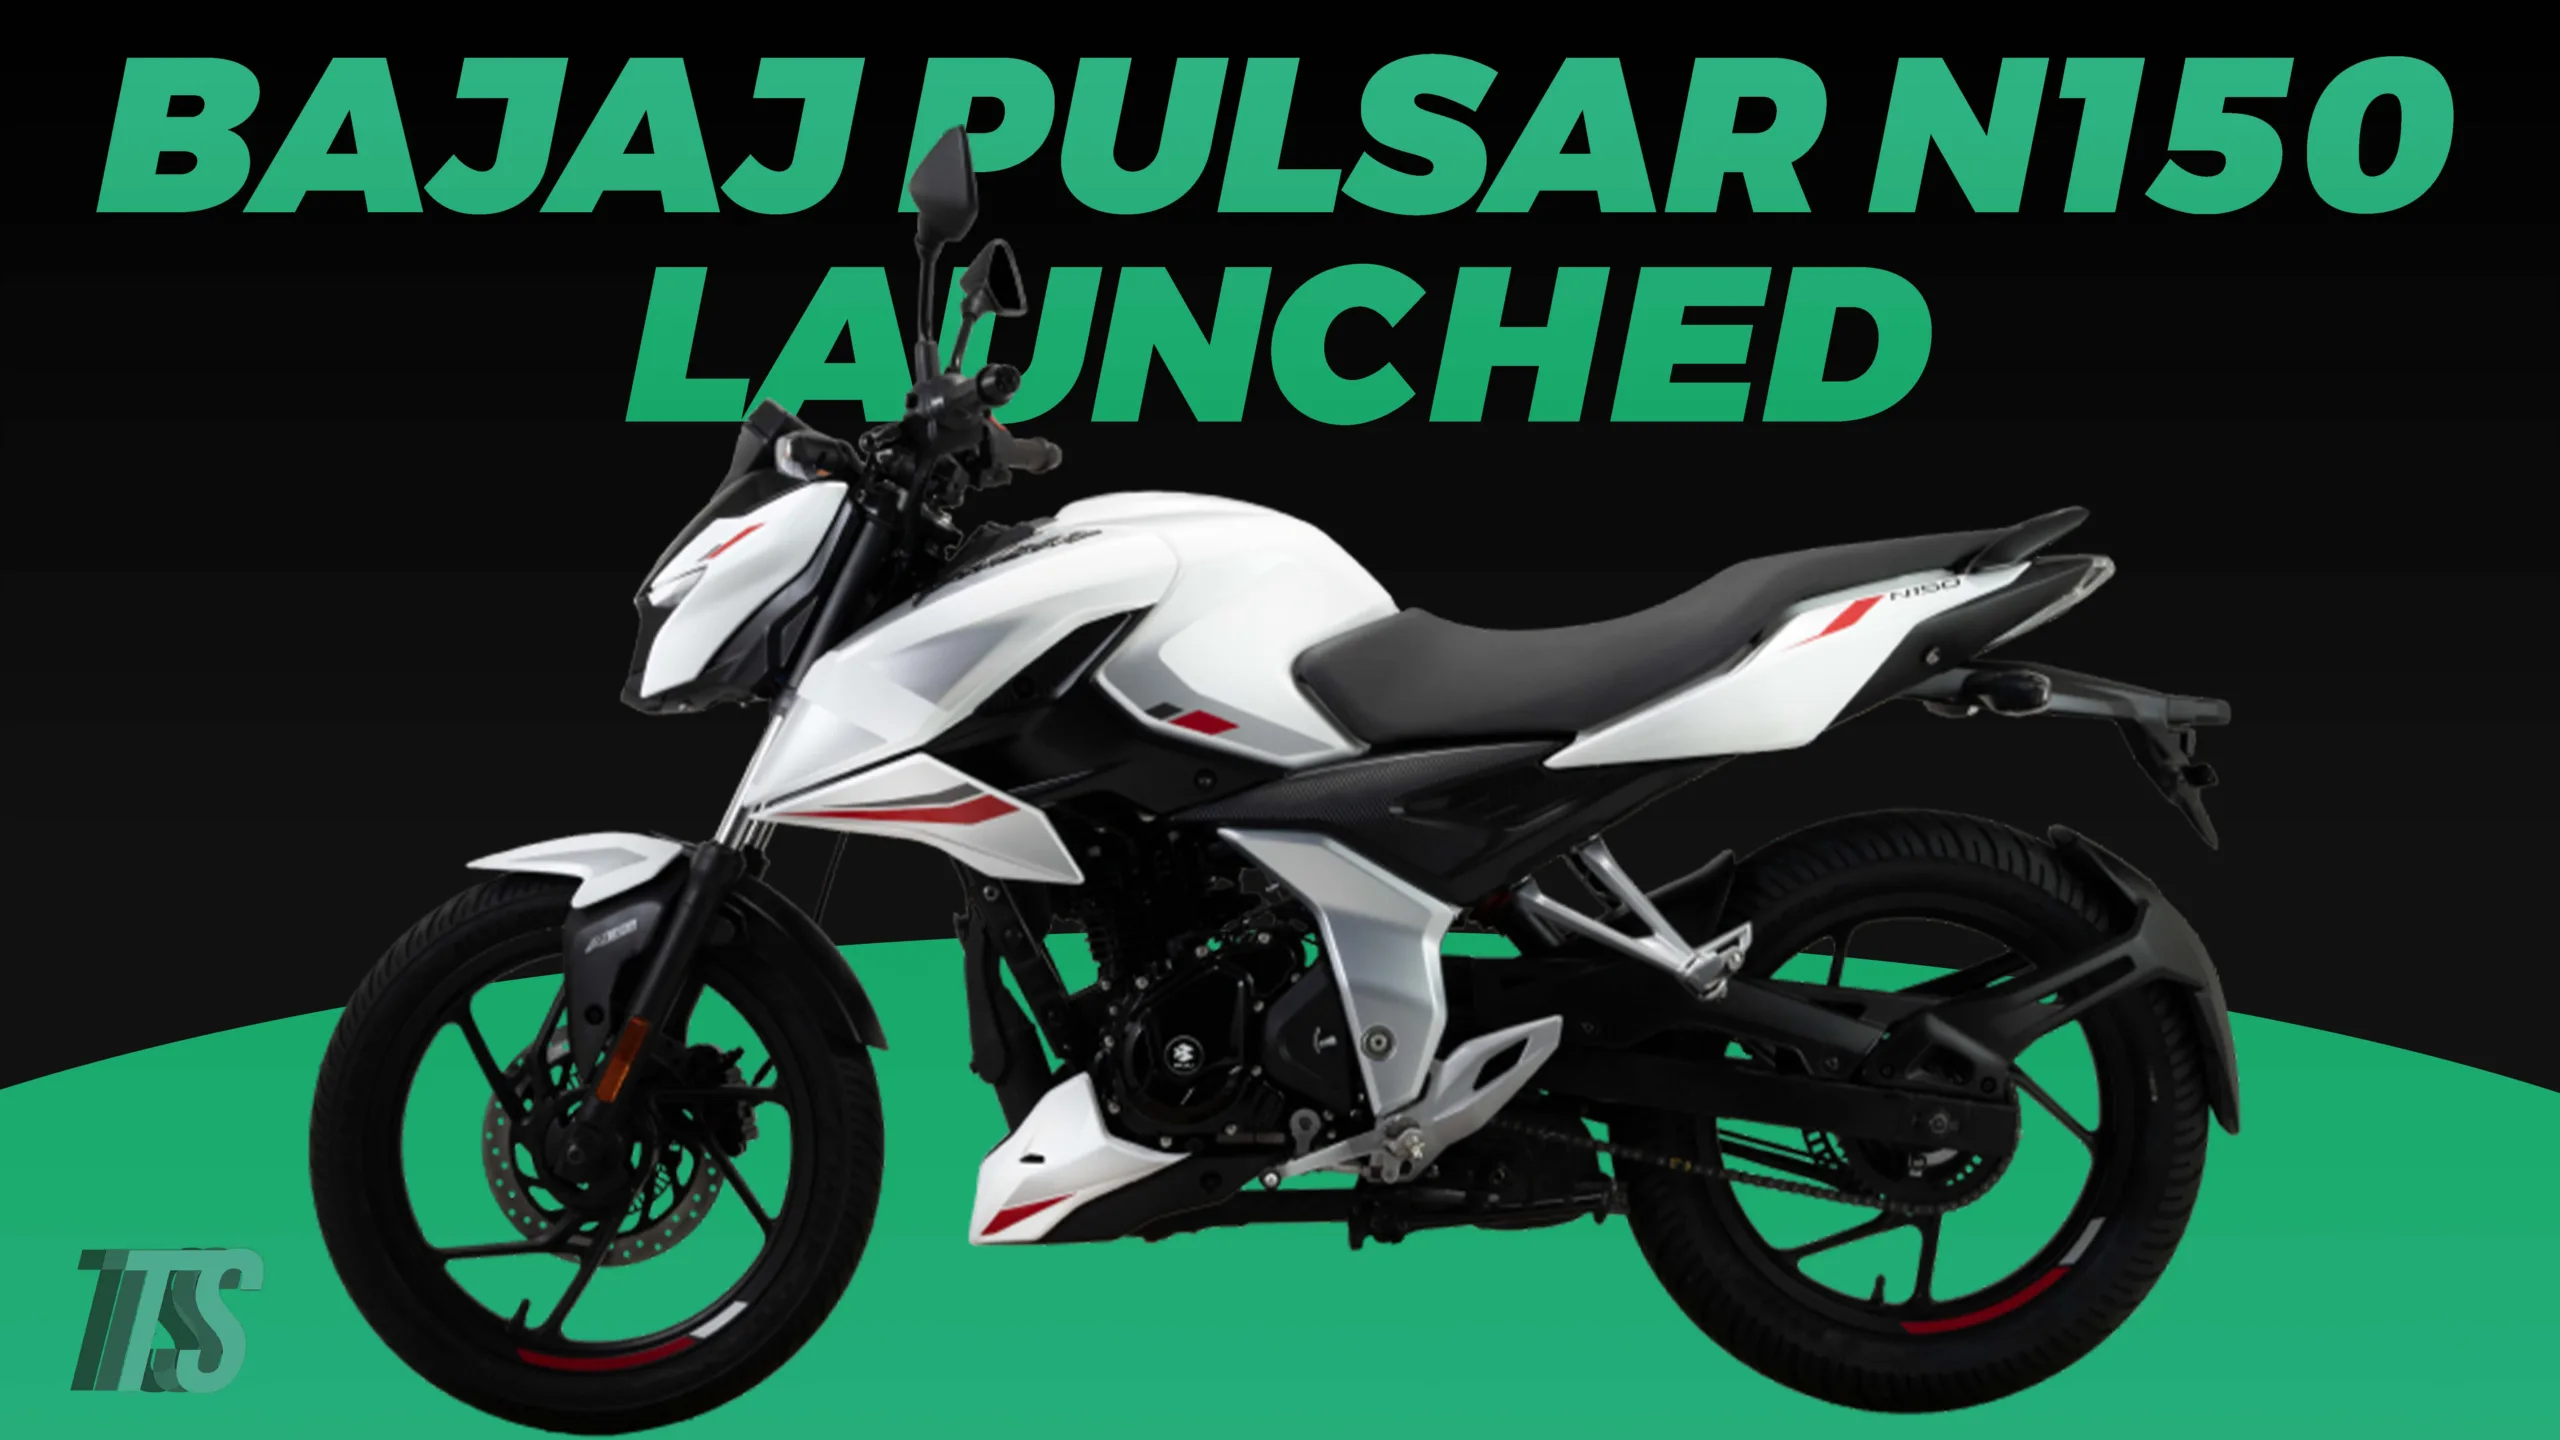 BAJAJ Pulsar N150 launched starting at RS 1.18 lakh